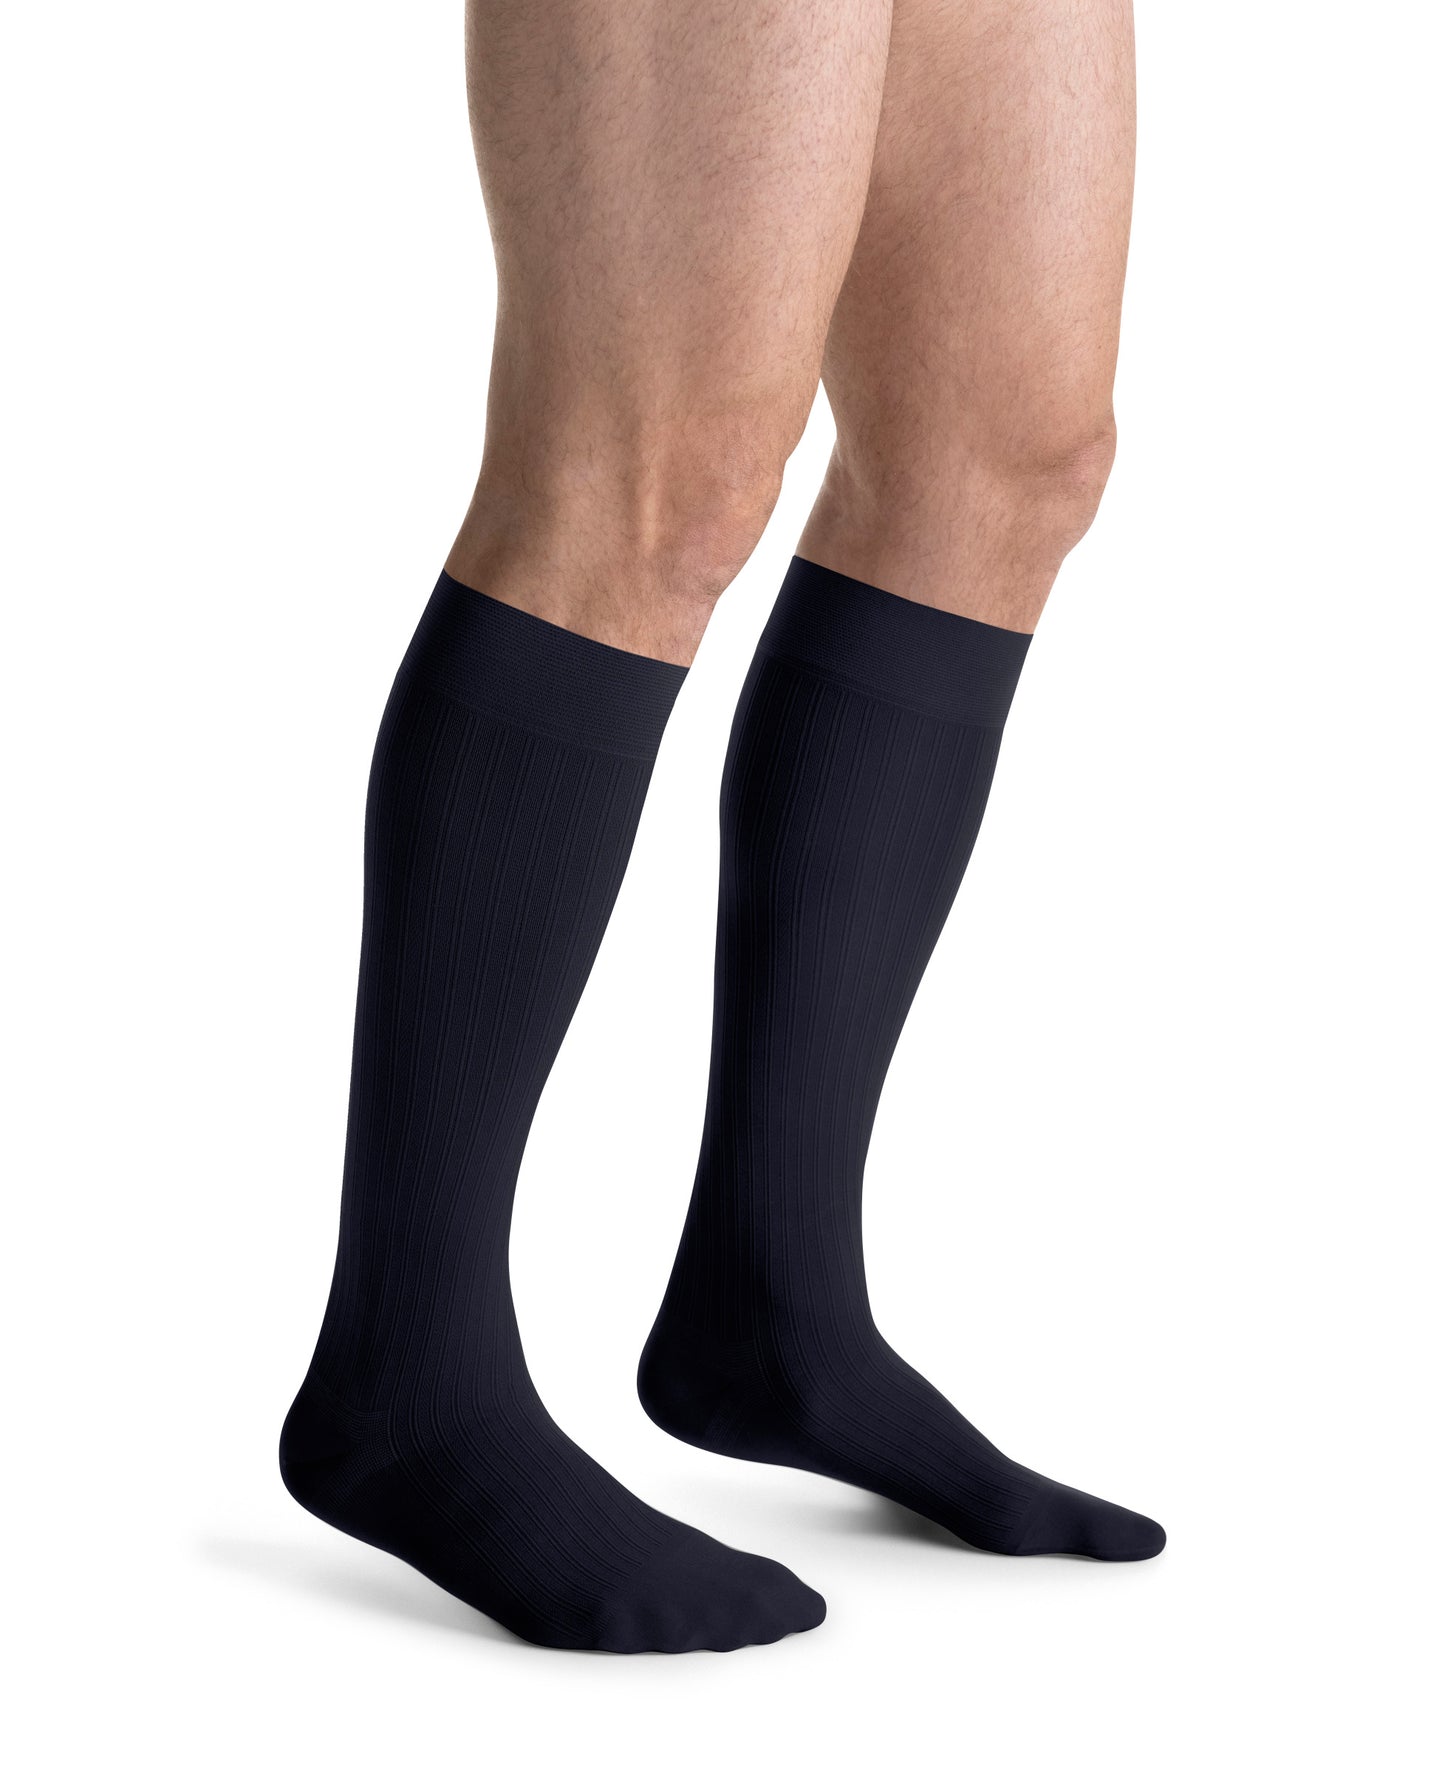 JOBST forMen Ambition Compression Socks 15-20 mmHg Knee High SoftFit Band Closed Toe